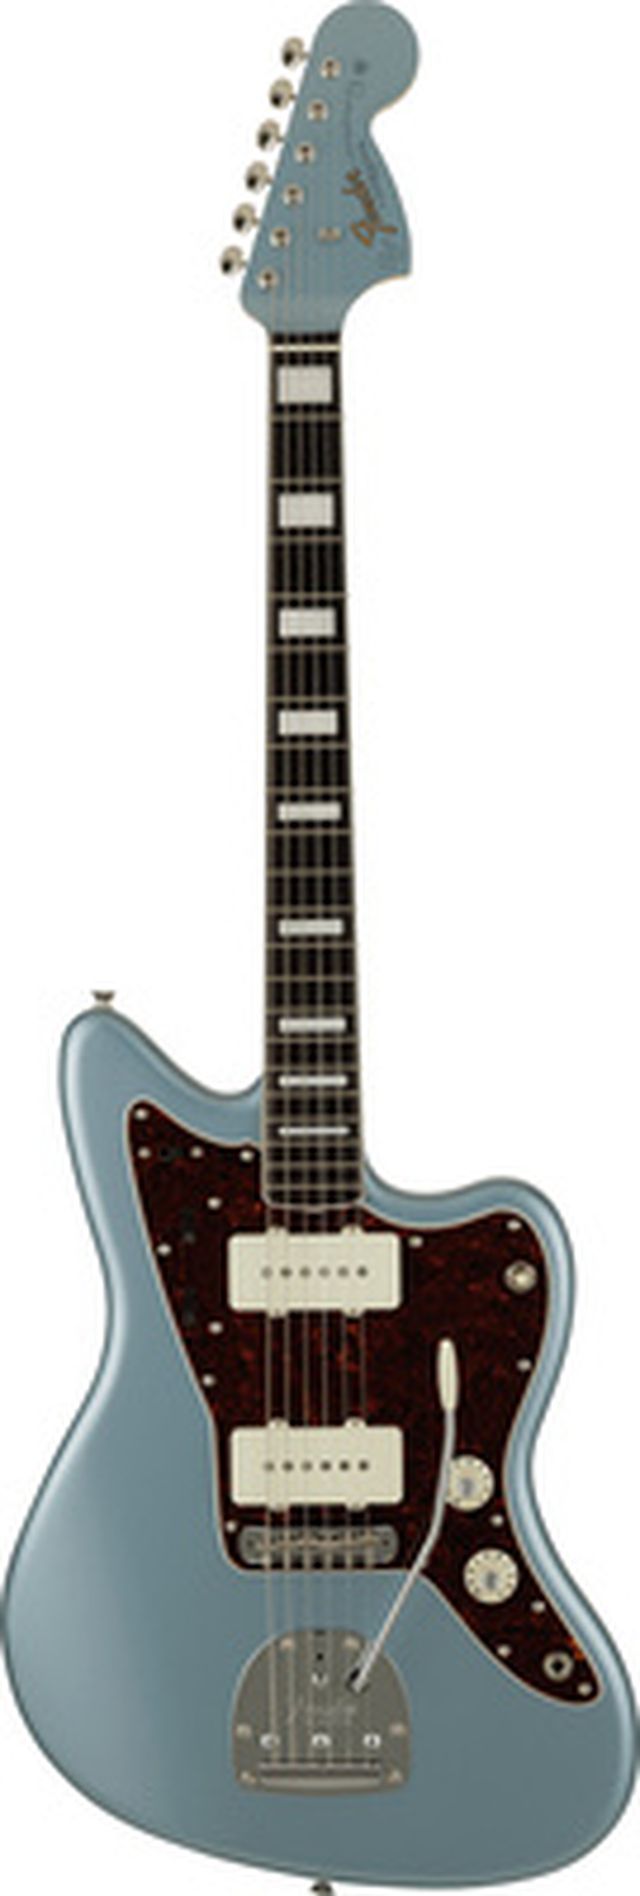 Fender MIJ Trad Late 60s Jazz IBM